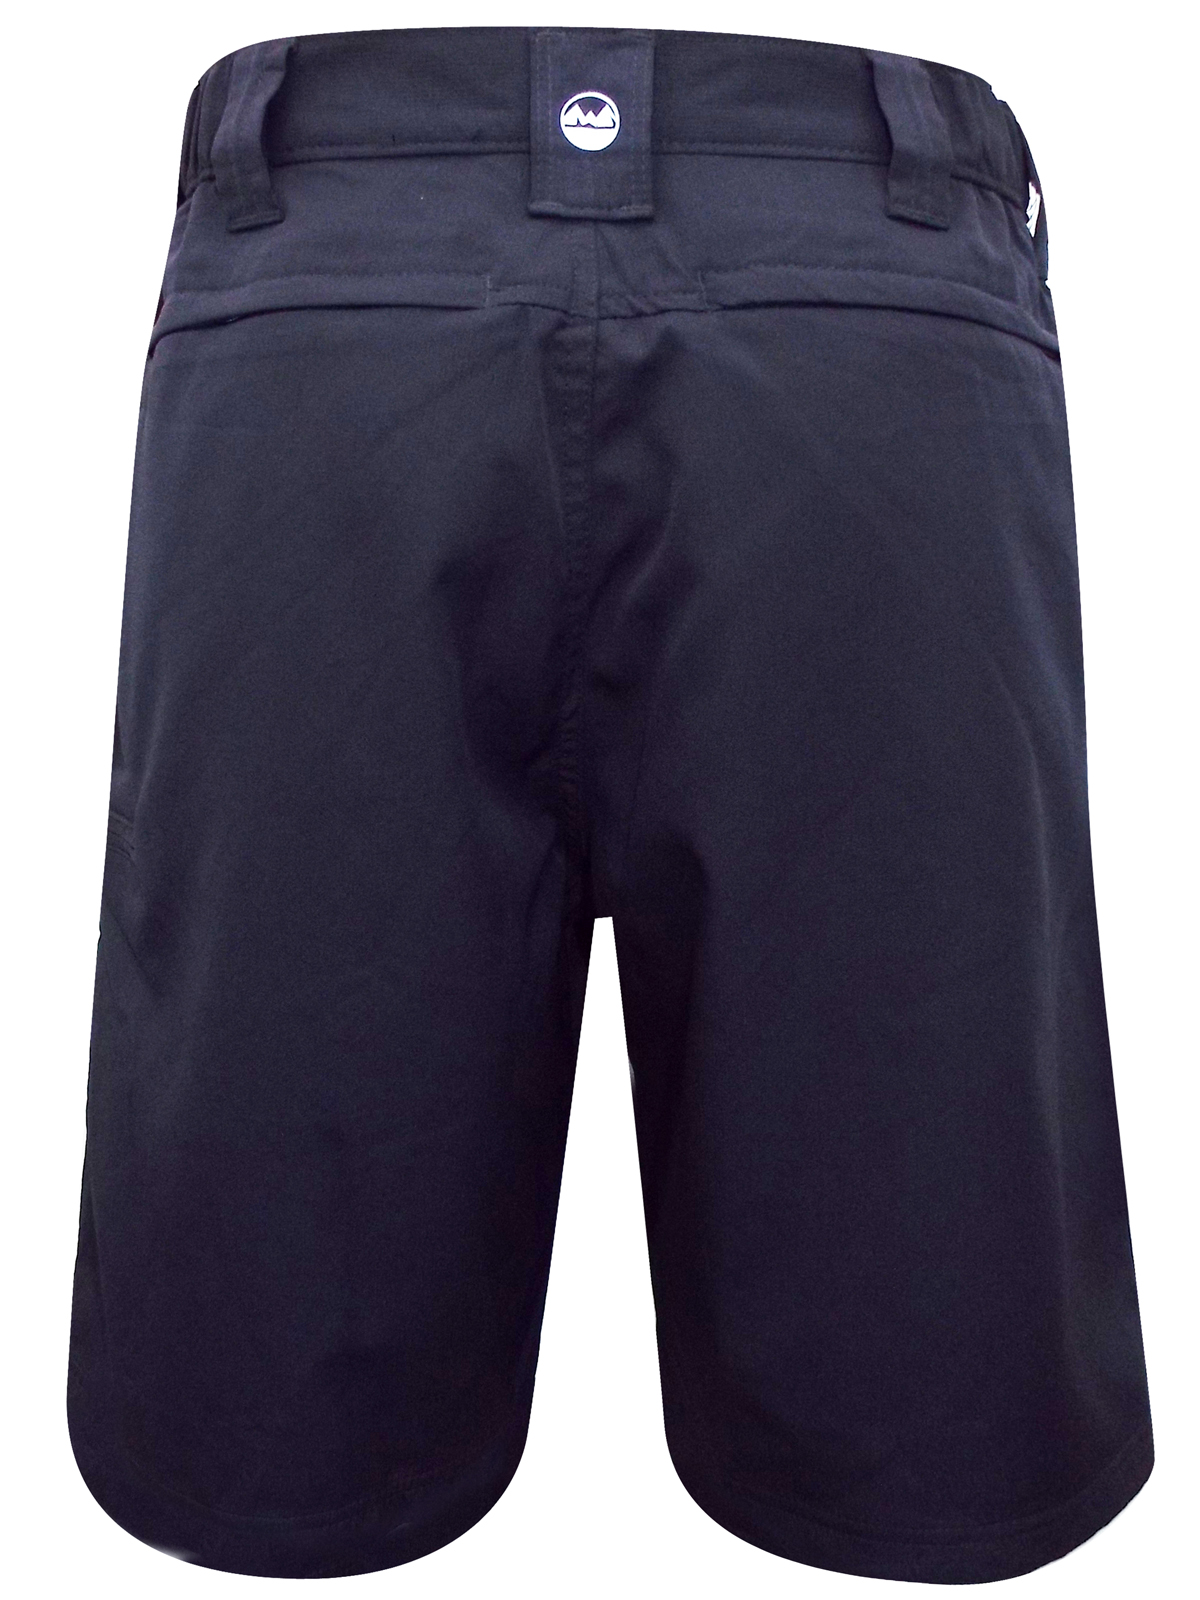 Wrangler - - Wr4ngler BLACK Zipped Pocket Cargo Shorts - Waist Size 32 ...